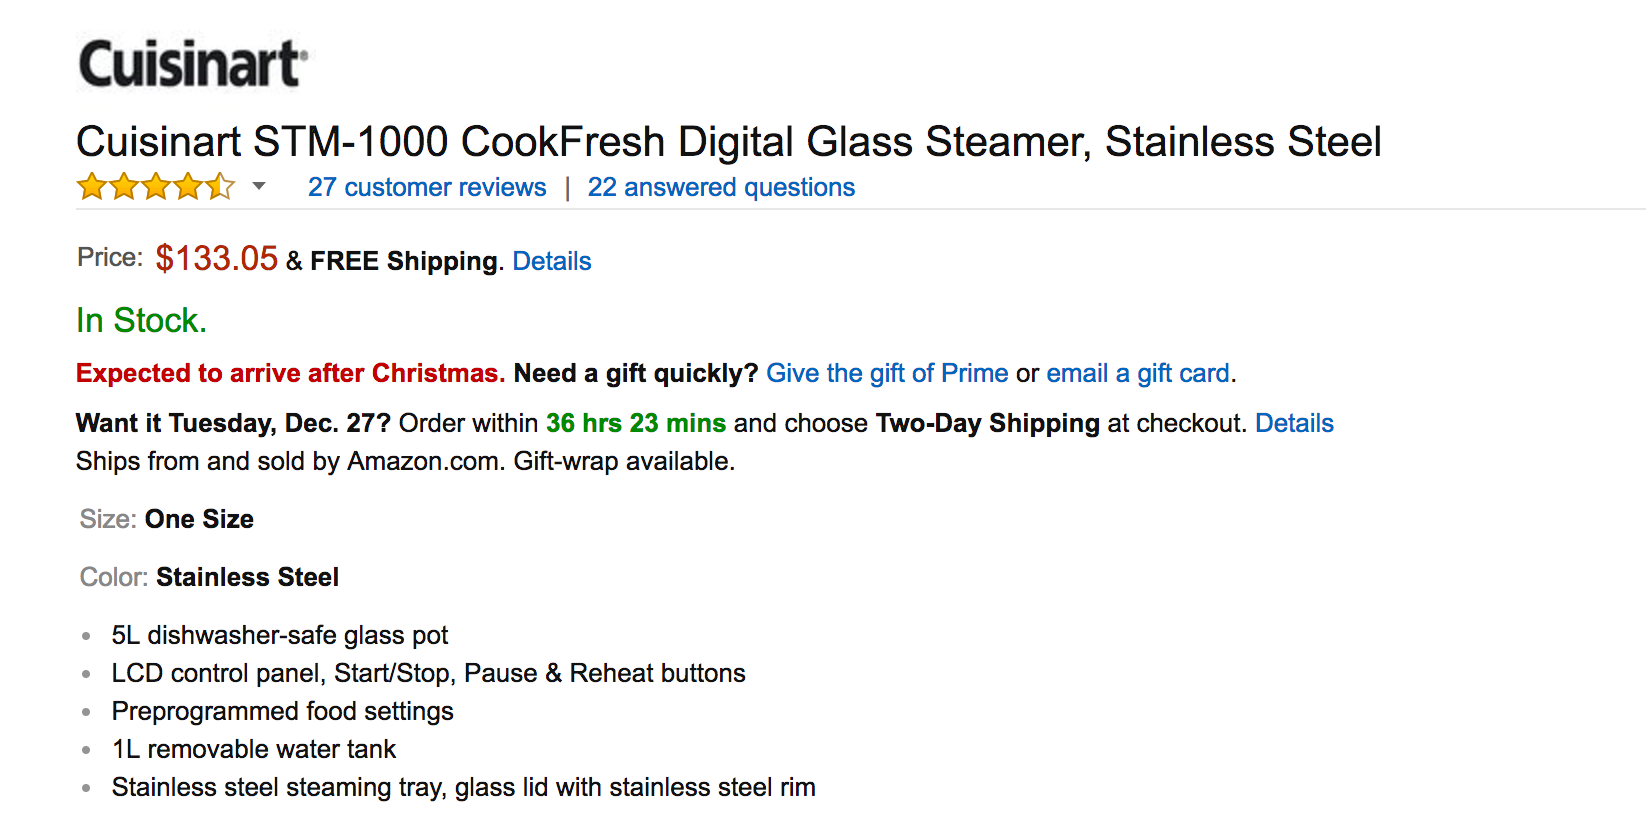 stainless-steel-cuisinart-cookfresh-digital-glass-steamer-4